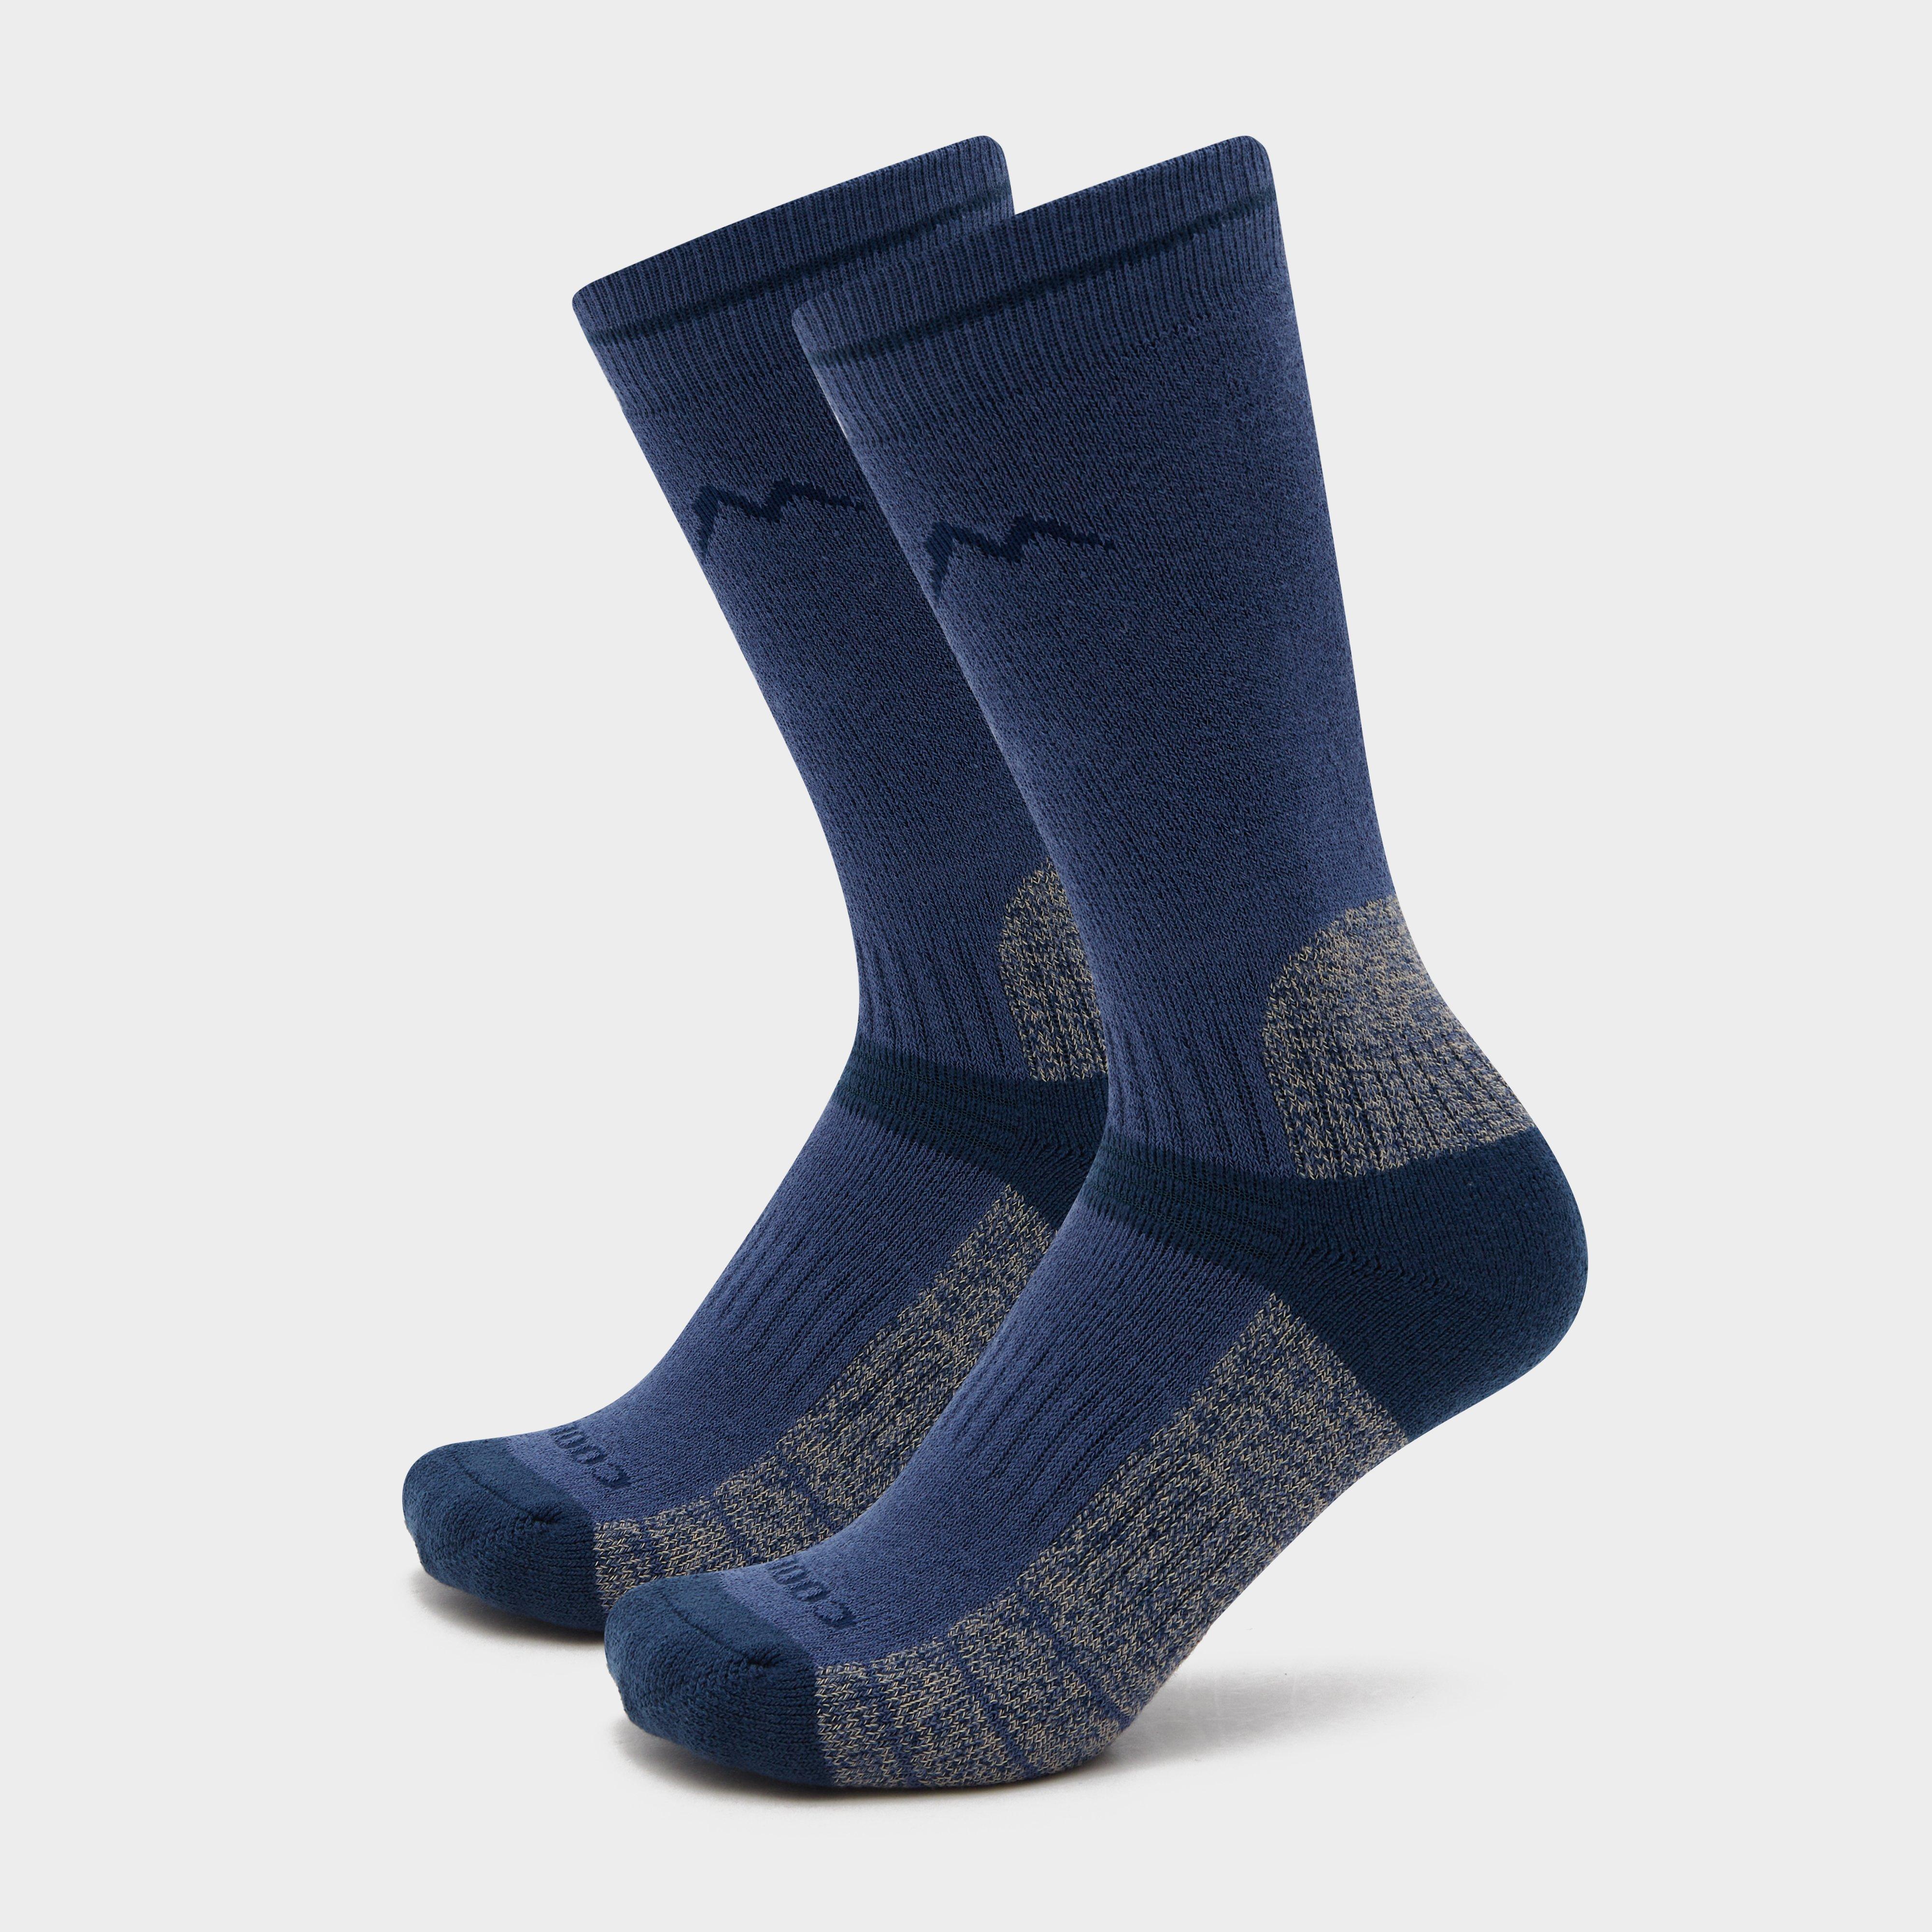 Peter Storm Women's Midweight Outdoor Socks - 2 Pair Pack, Blue